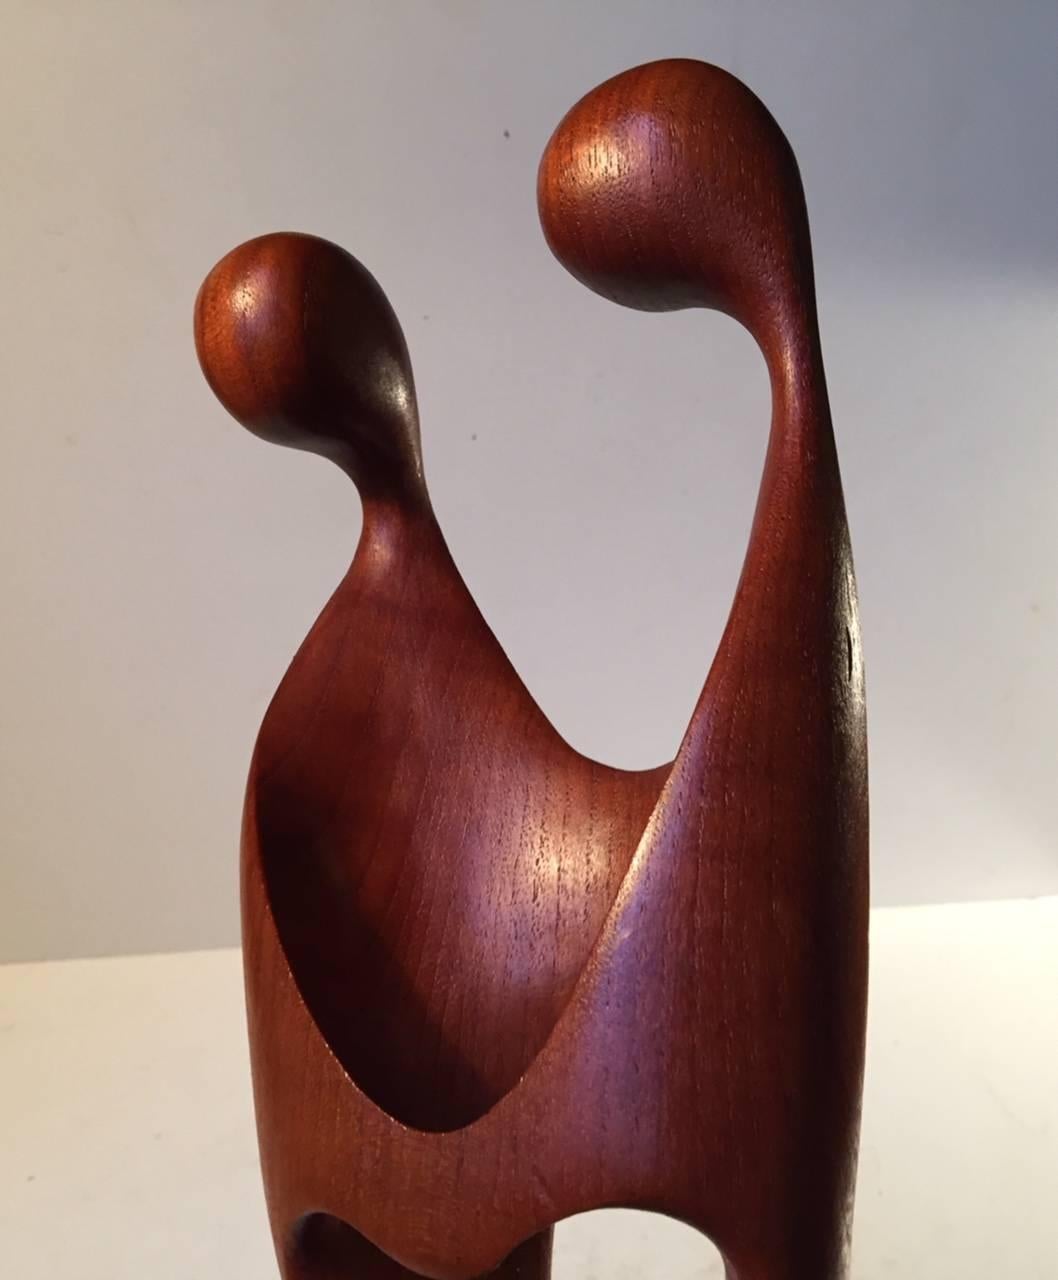 Organically shaped teak figurine or sculpture. Handmade in Denmark by Simon Møbelfabrik during the 1960s.